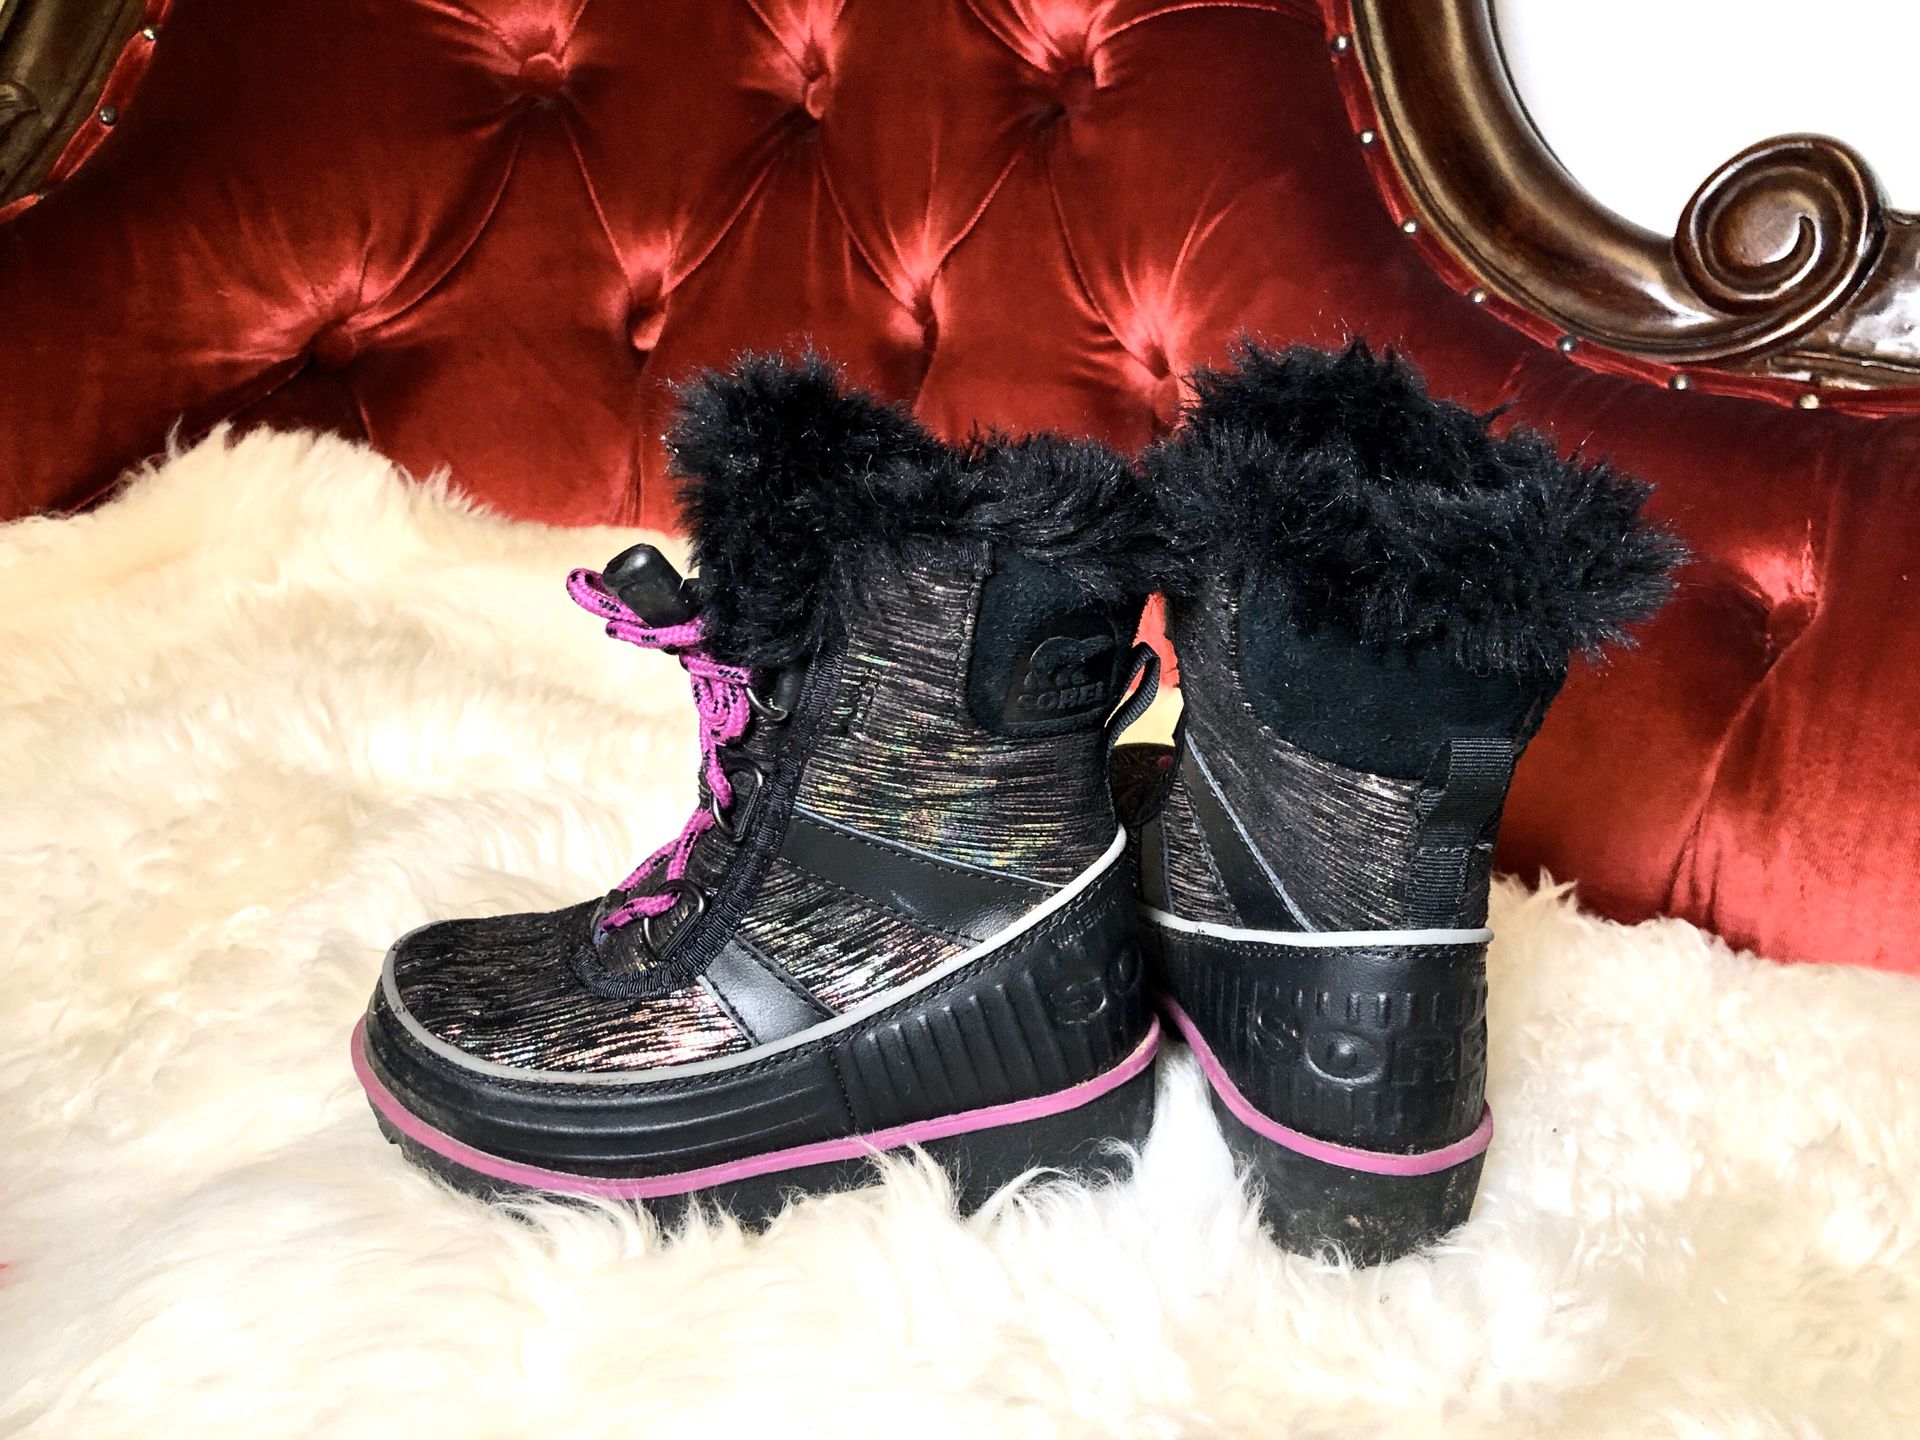 Girls boots by Sorel, little kid size 9 (EU 26)